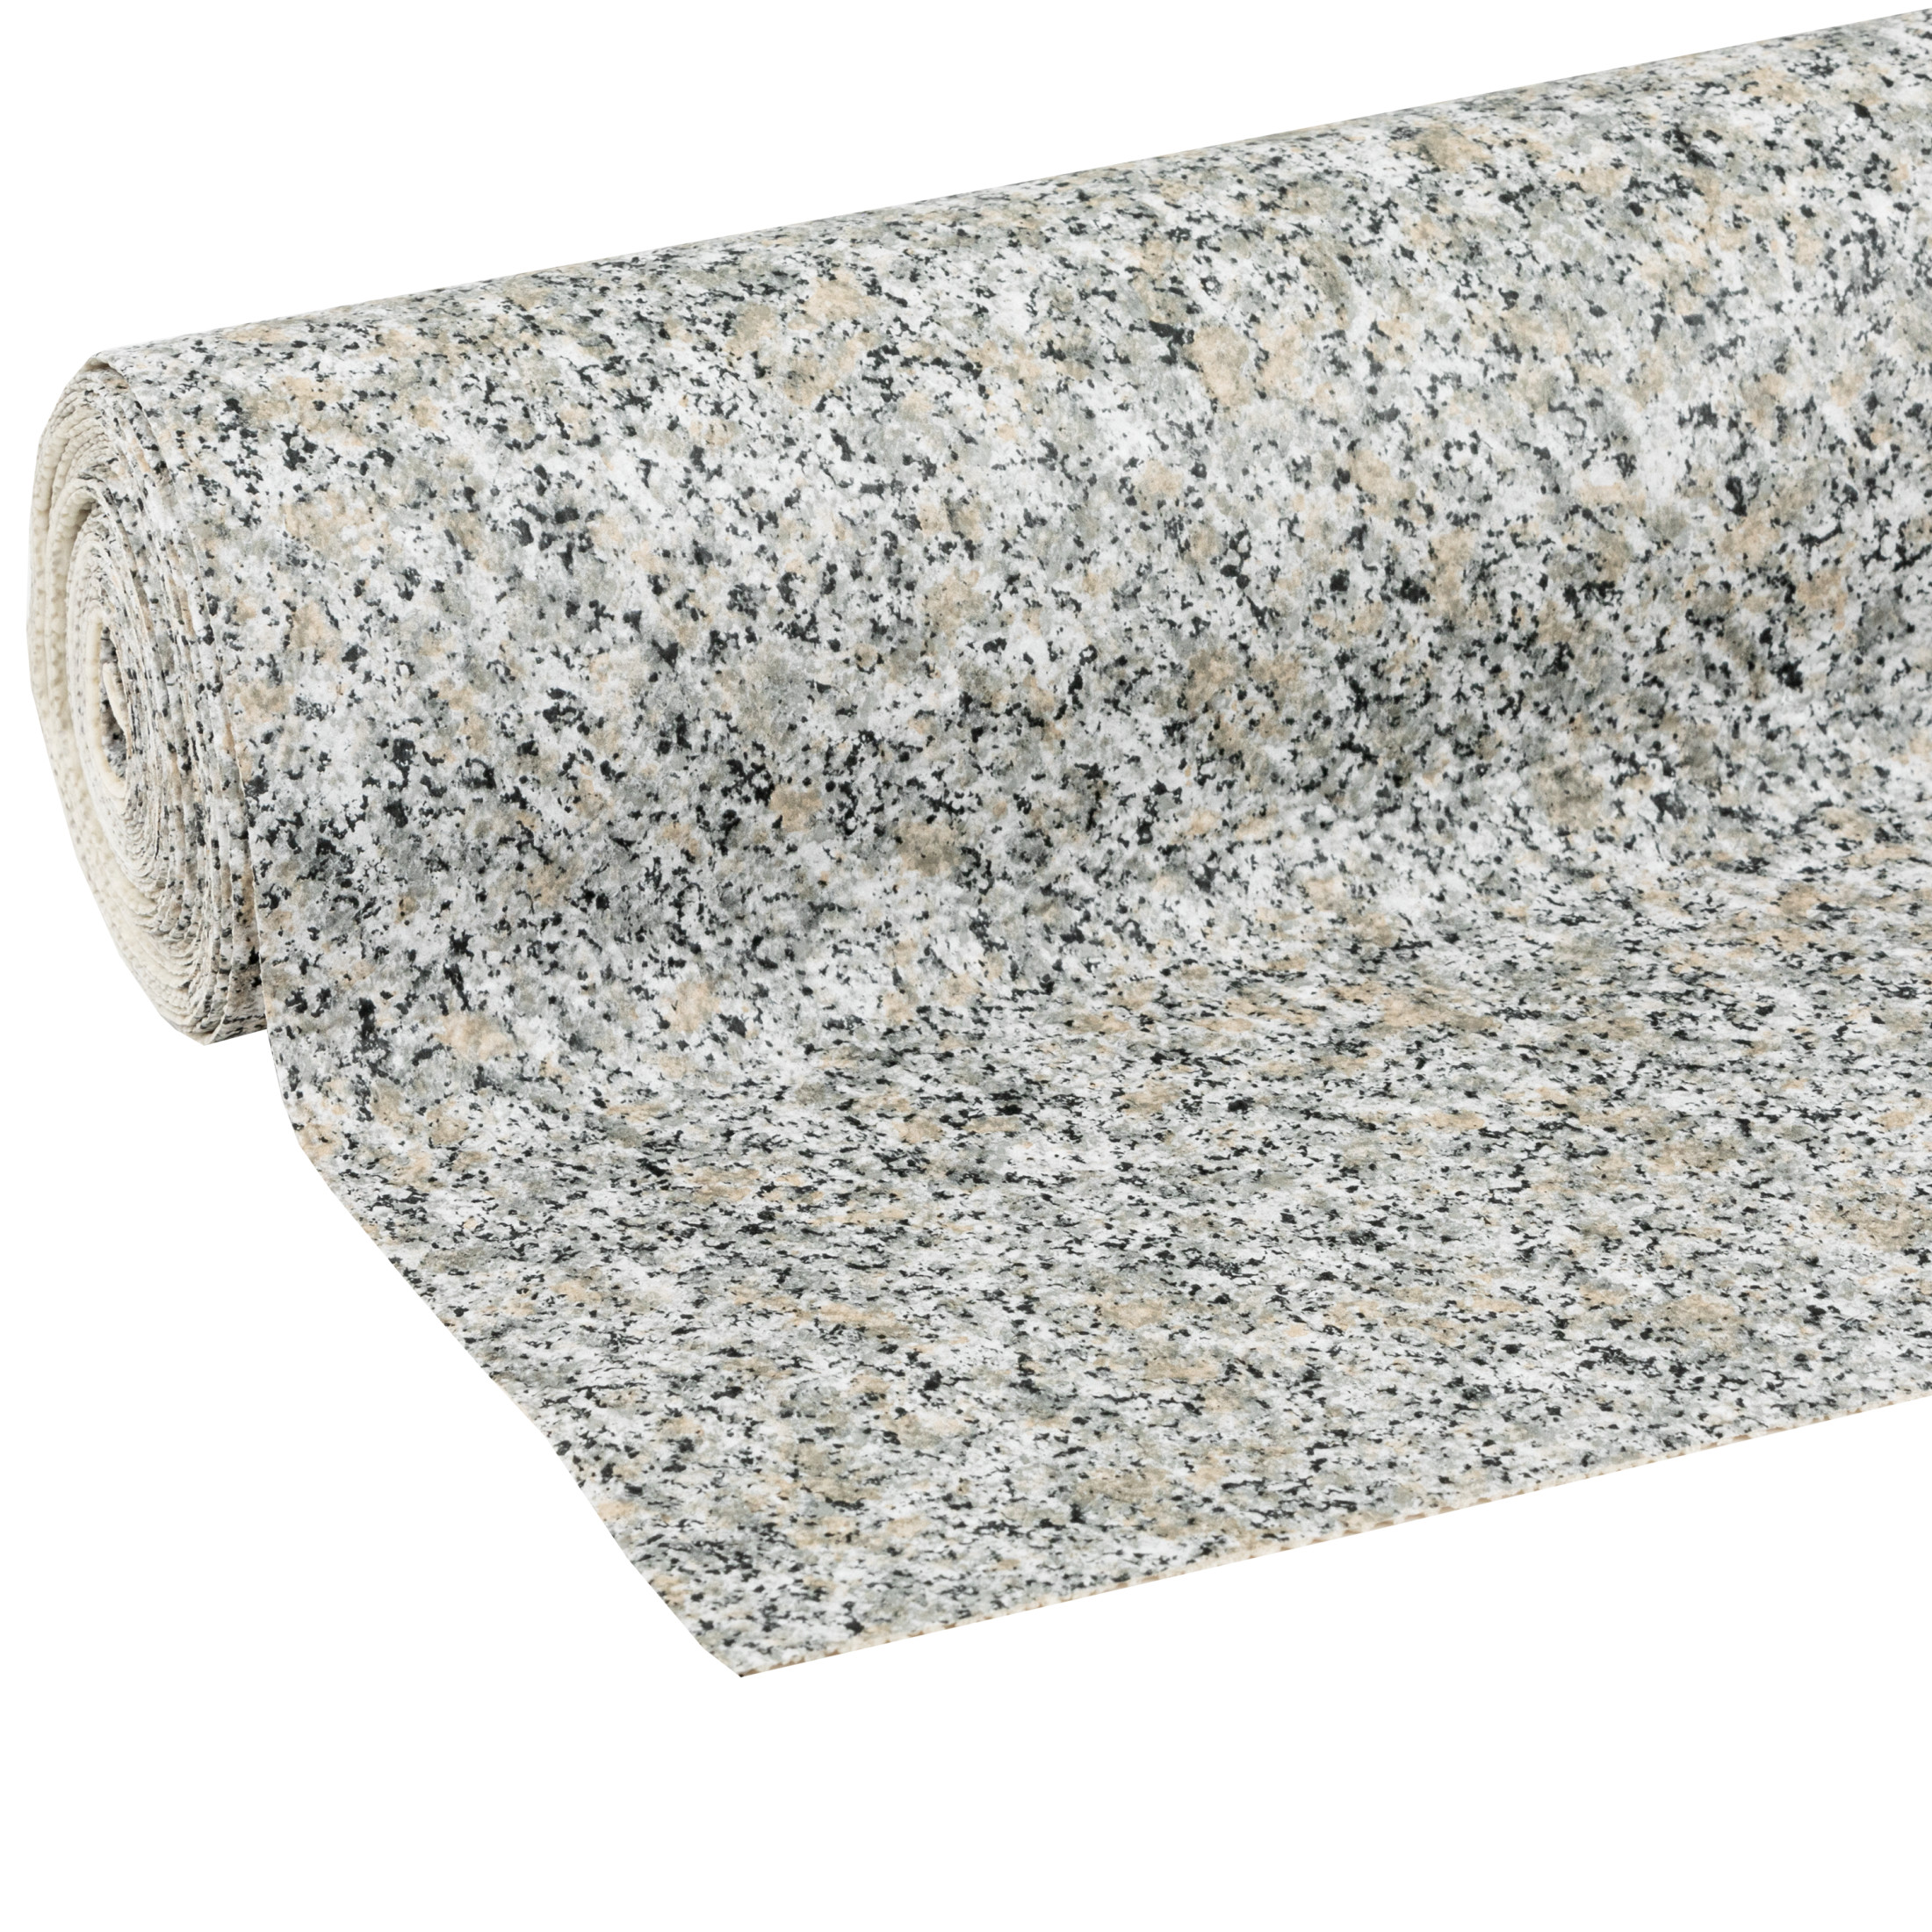 EasyLiner Smooth Top Shelf Liner, Grey Granite, 20 in. x 18 ft. Roll - image 1 of 11